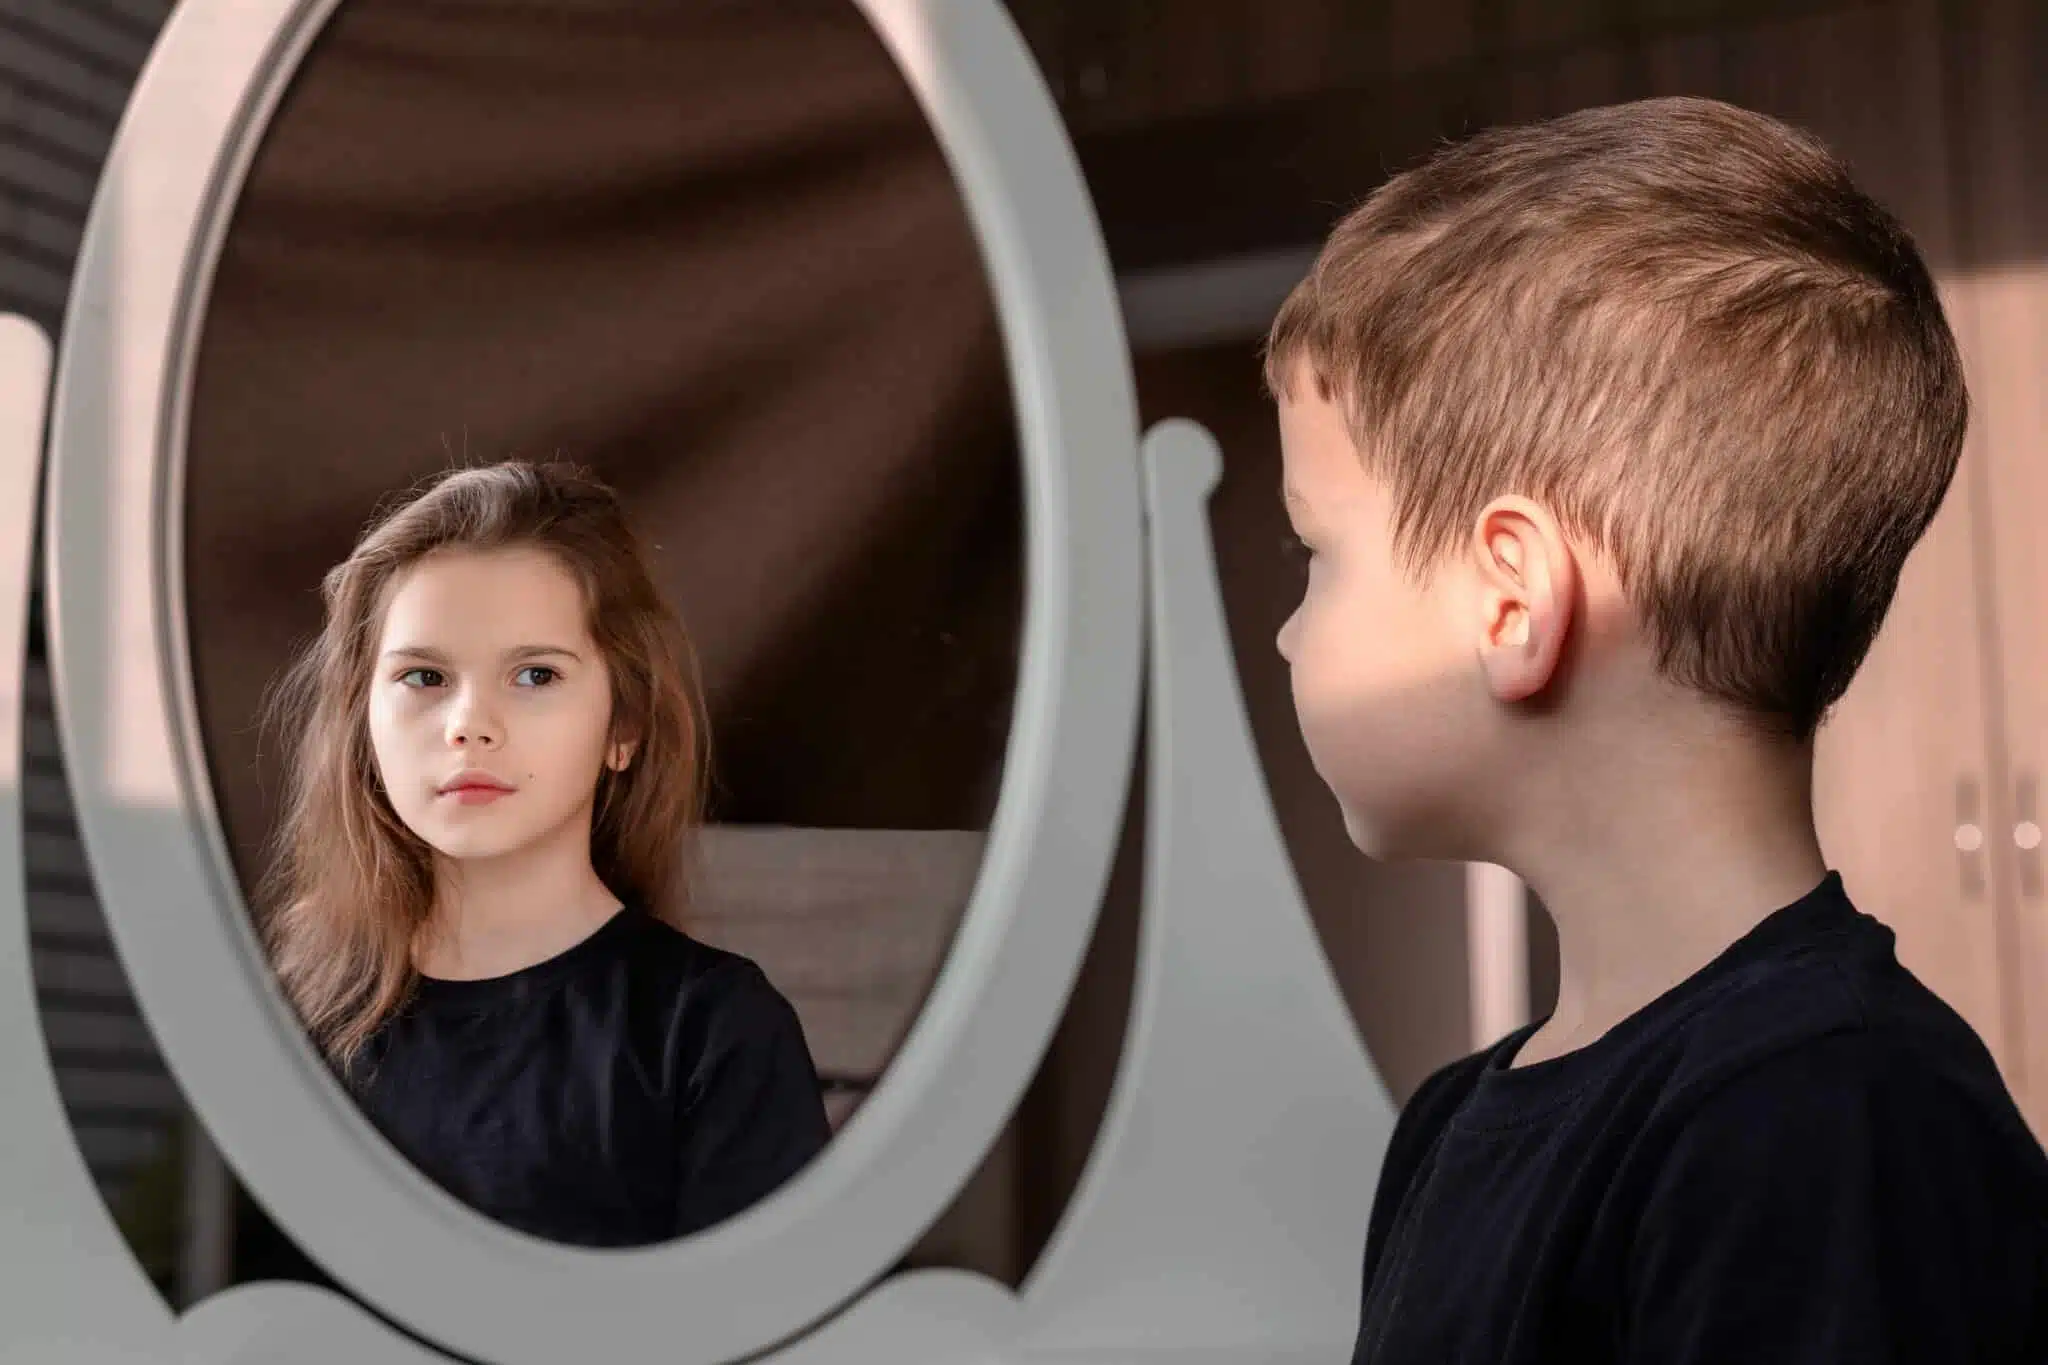 Boy with gender dysphoria looking in mirror